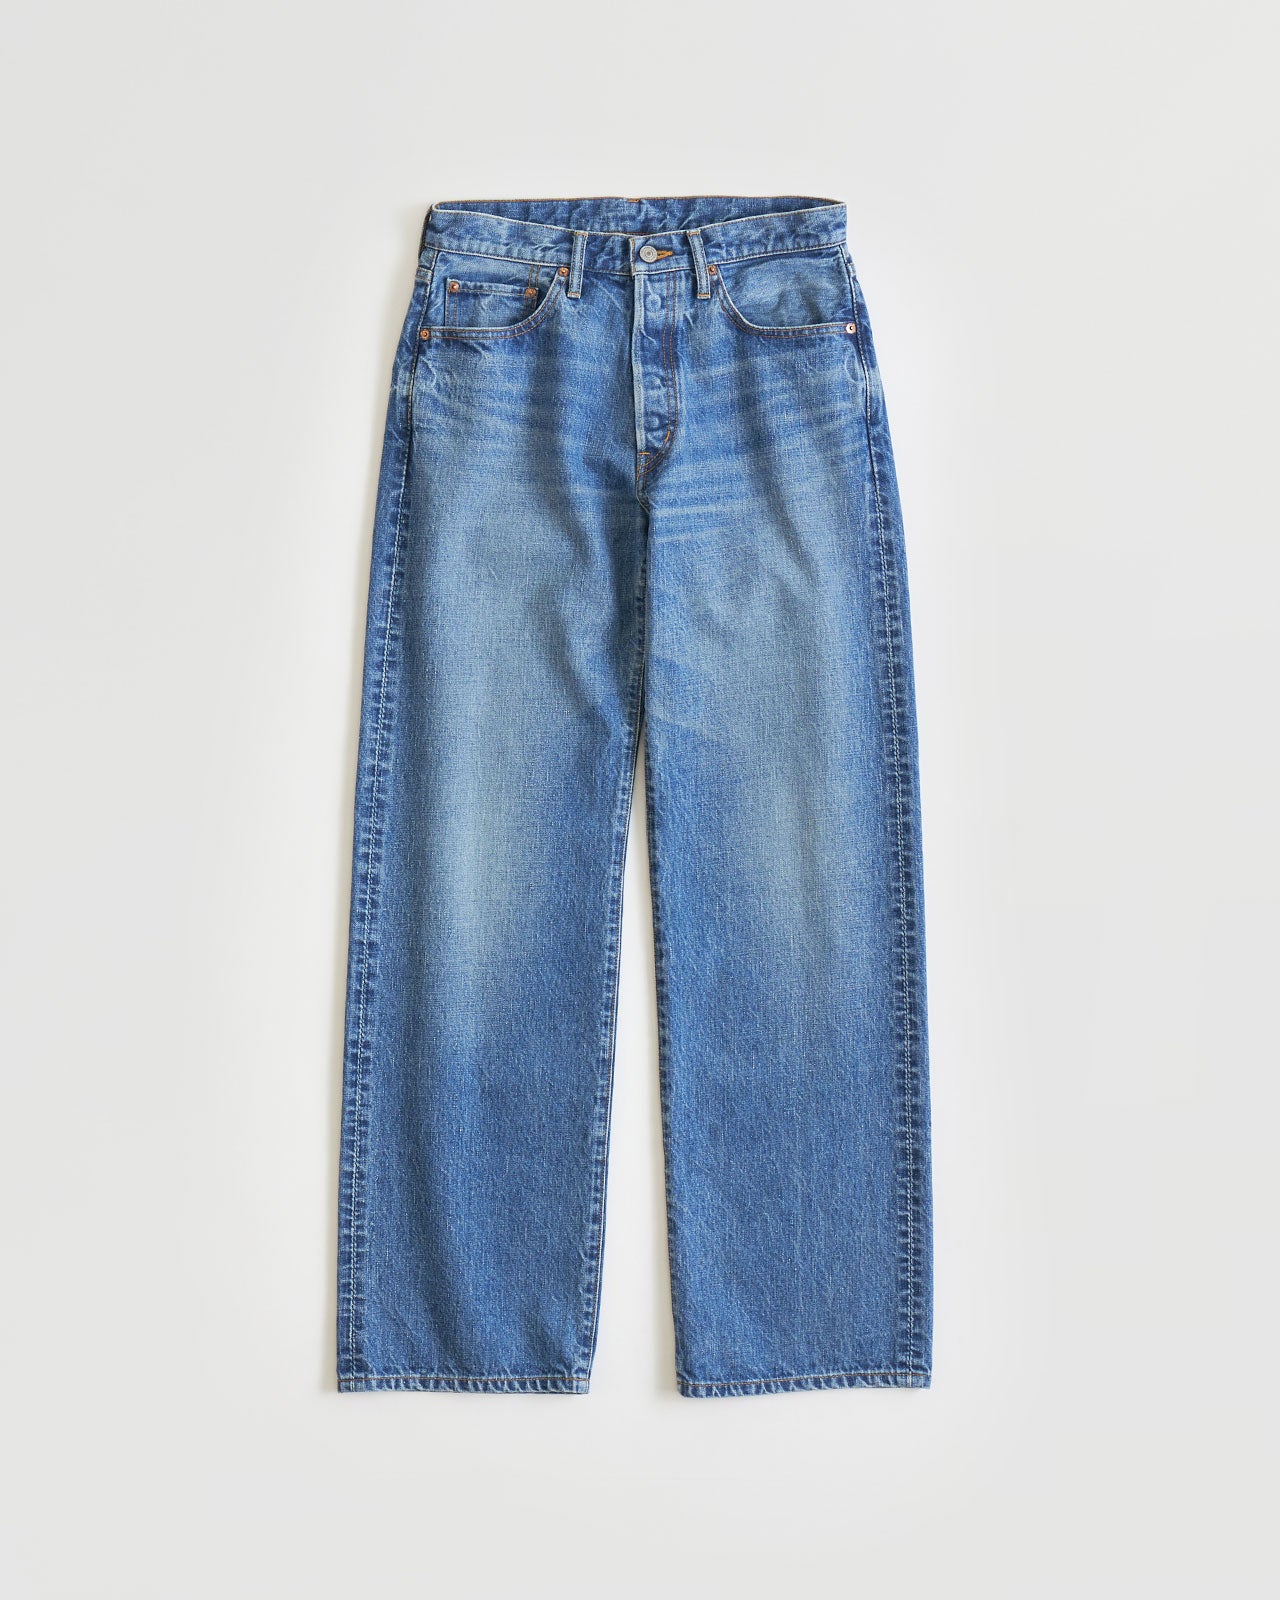 pangea jeans 36inch - パンツ